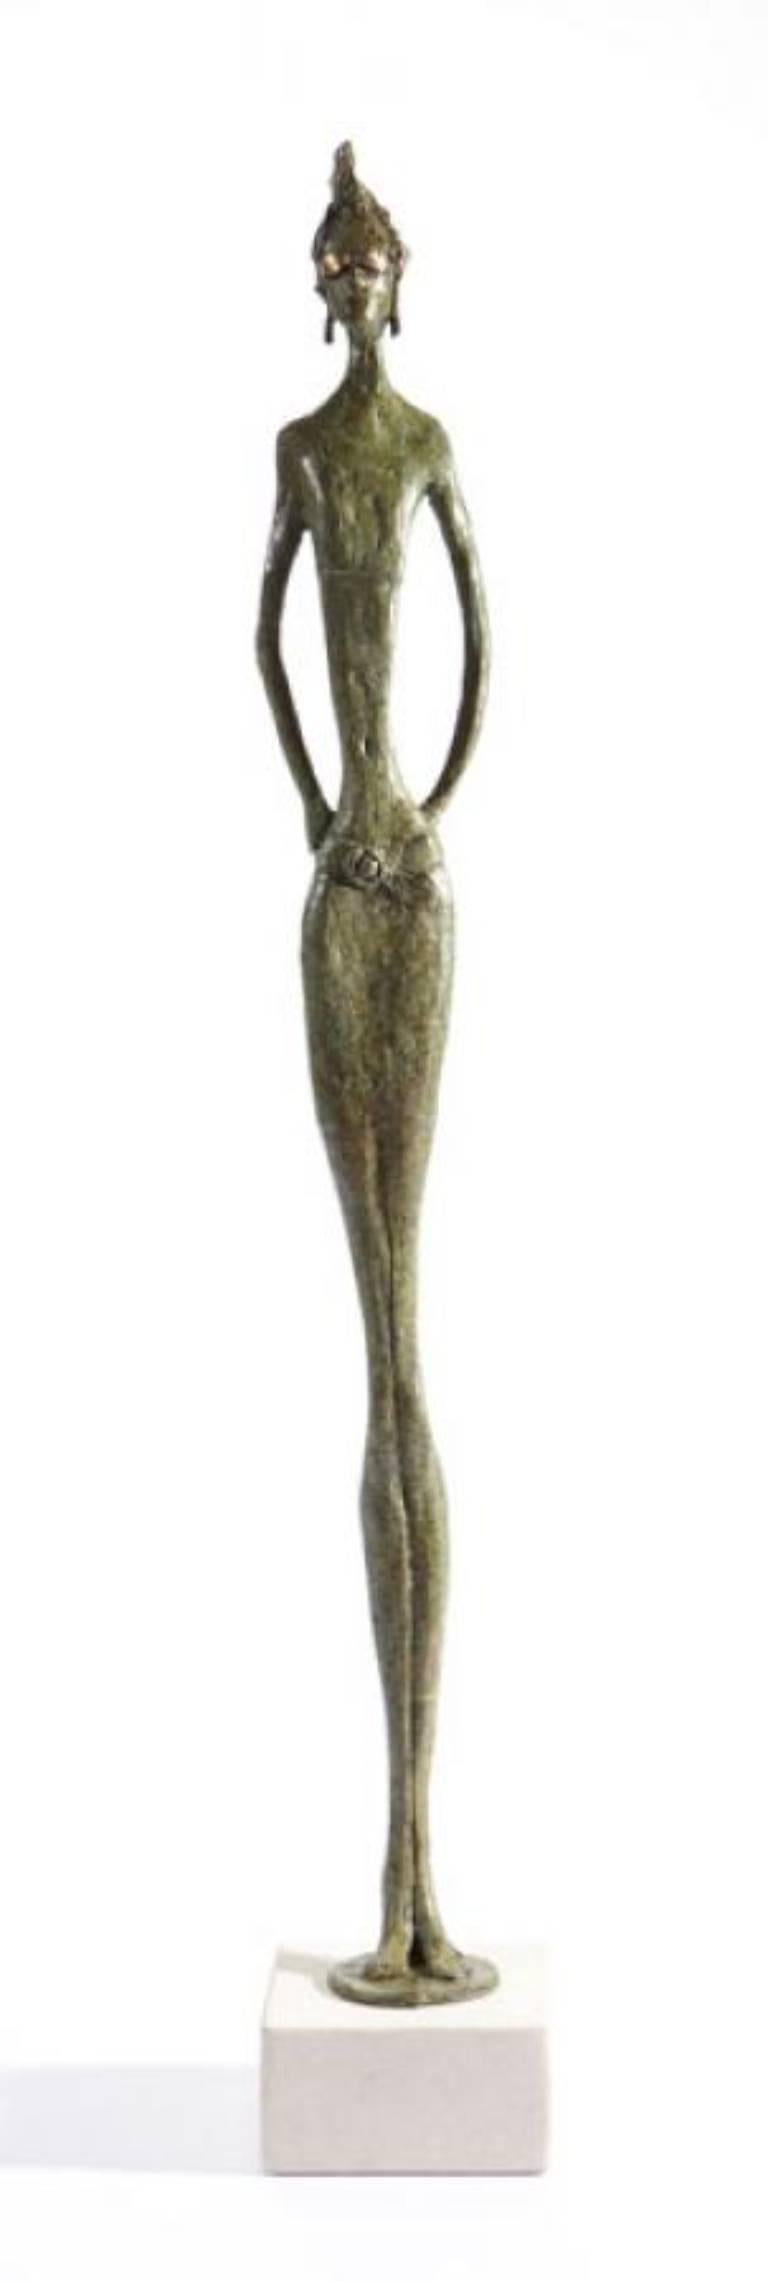 Figurative Sculpture Sara Ingleby-Mackenzie - Mint Julep - statue de bronze figurative élancée